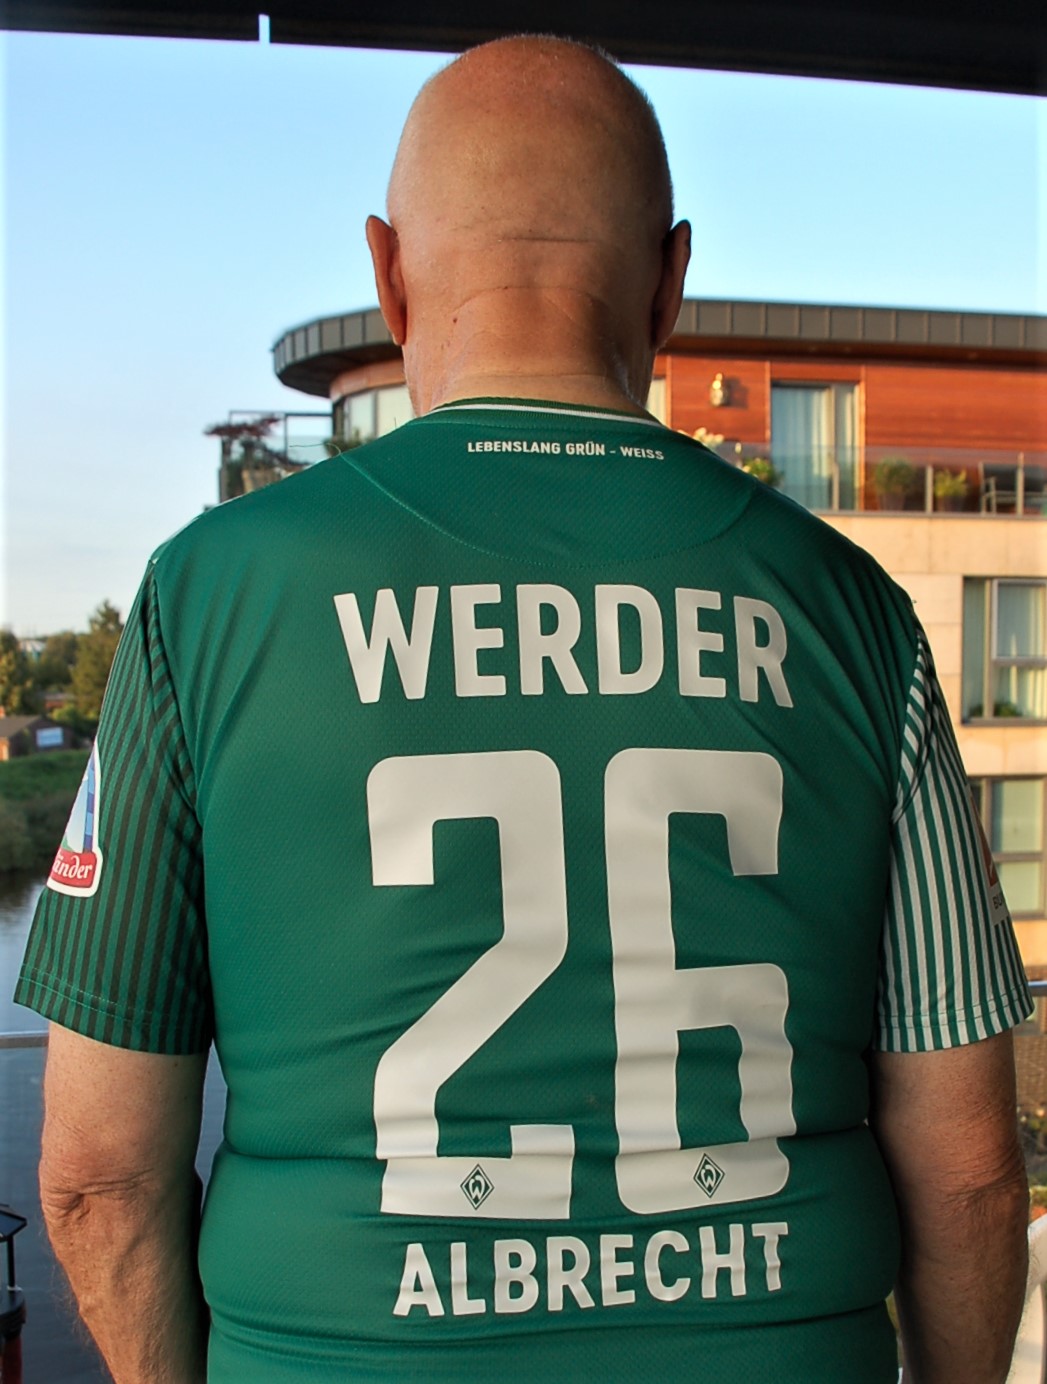 You are currently viewing Werder Bremen verabschiedet Dieter Albrecht